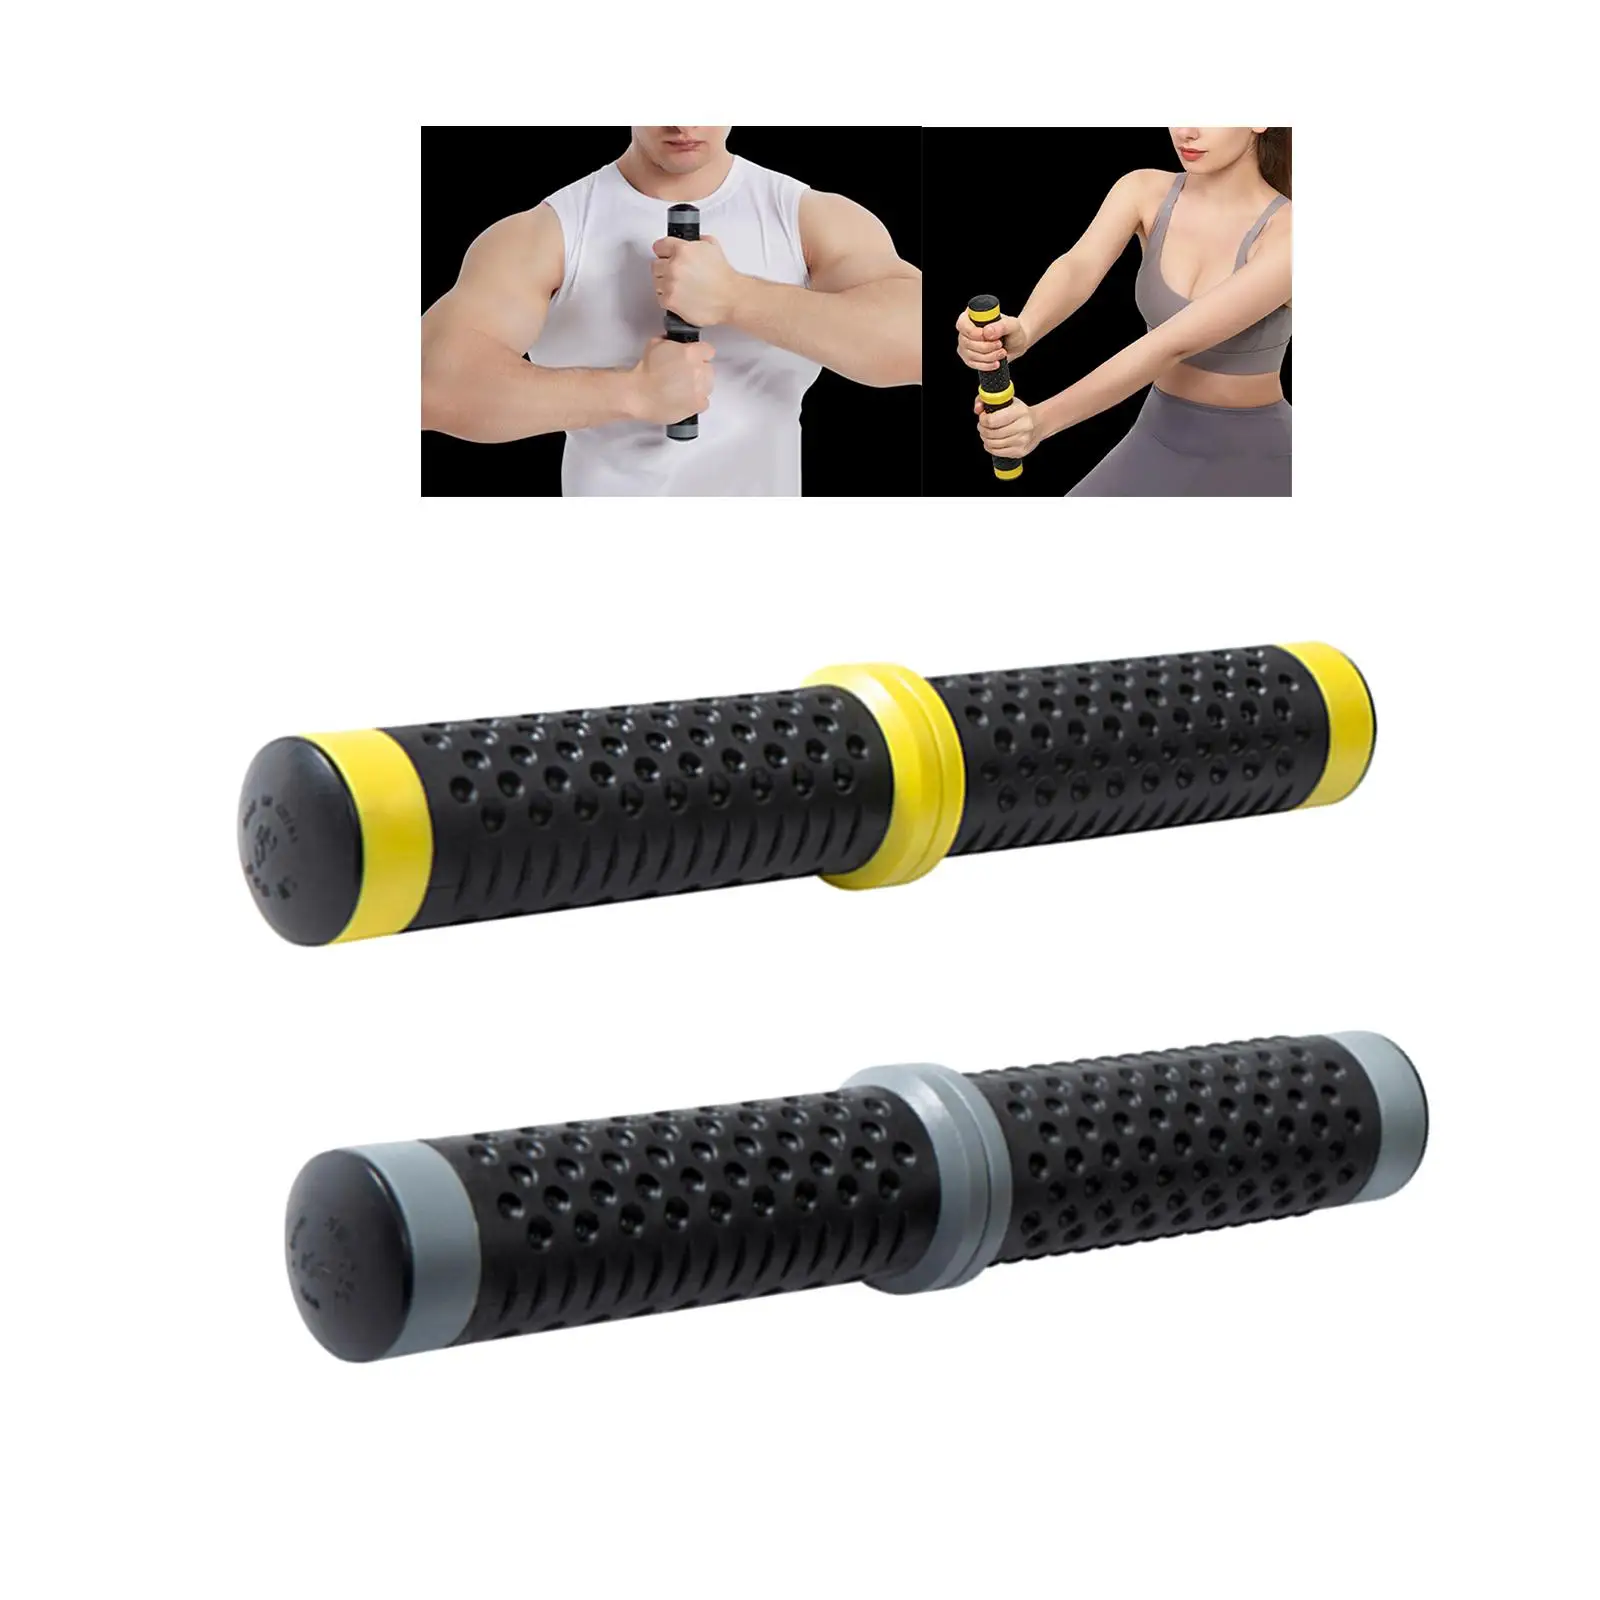 Hand Grip Strengthener Twist Bar Forearm Grips Heavy Duty Hand Gripper for Training